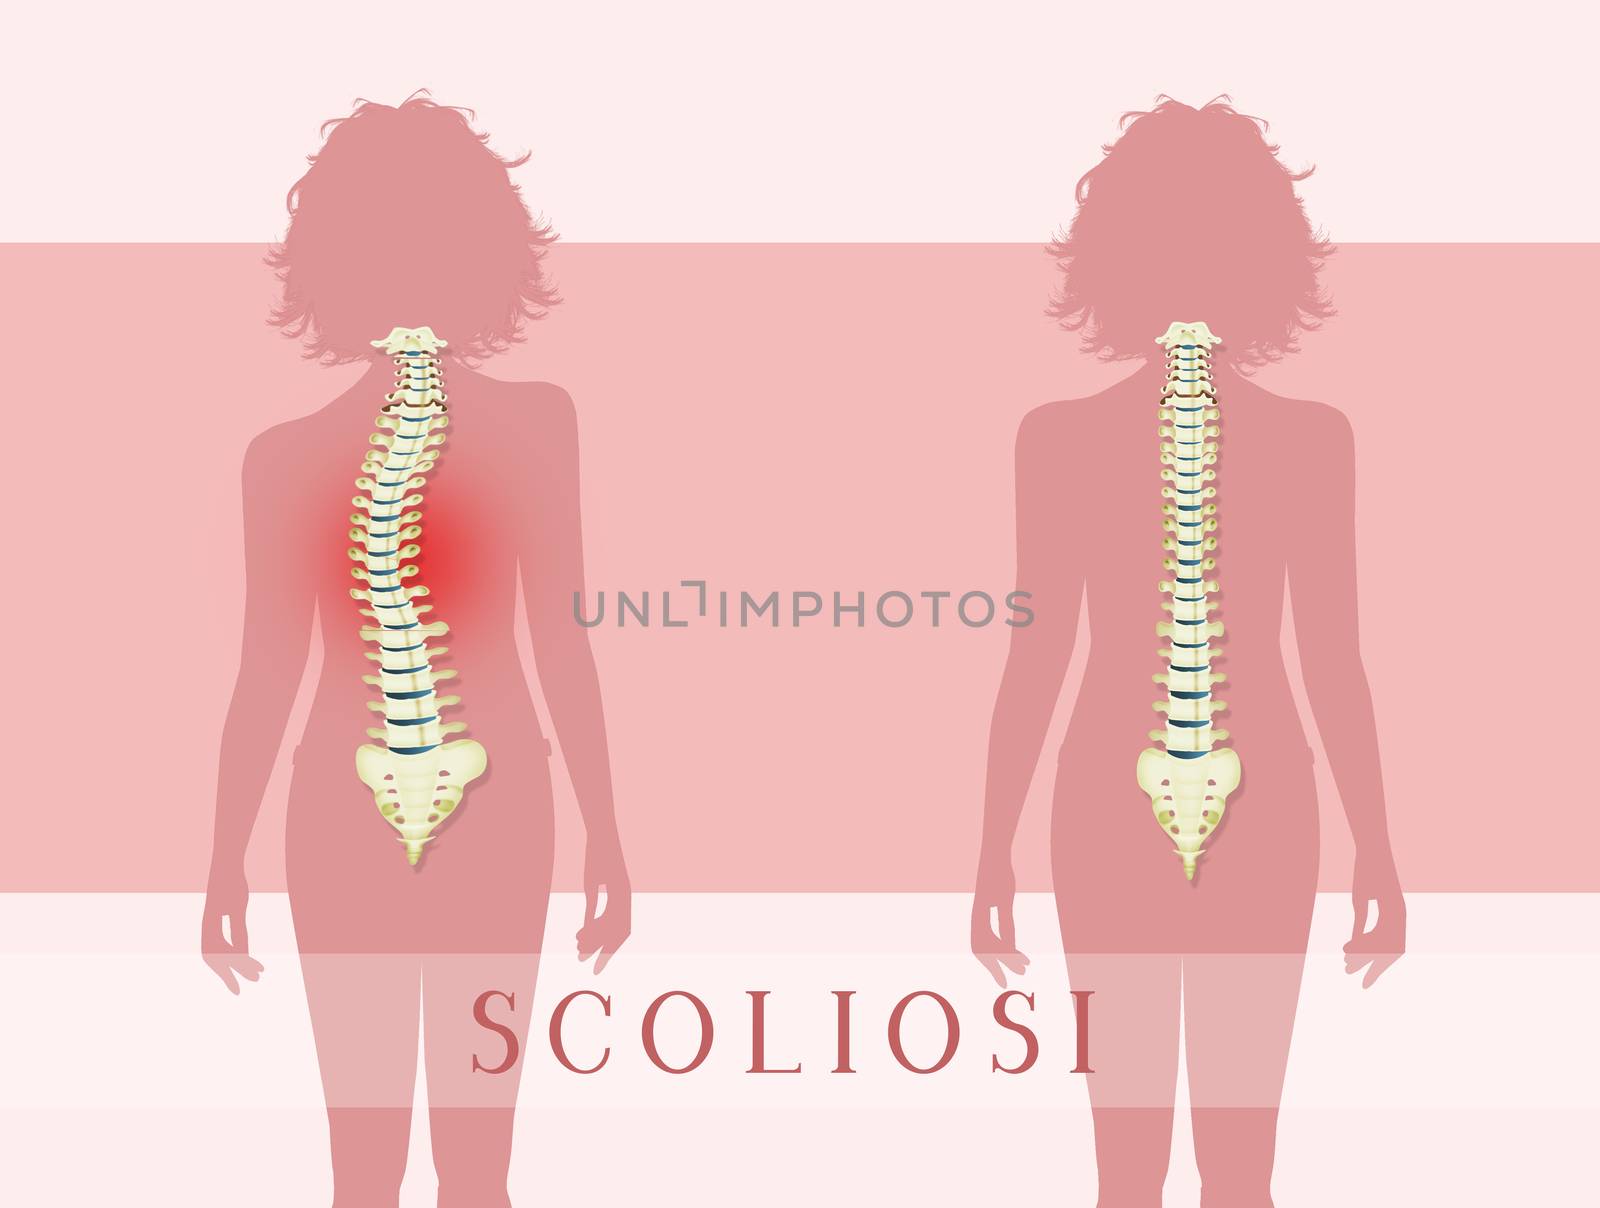 illustration of scoliosis